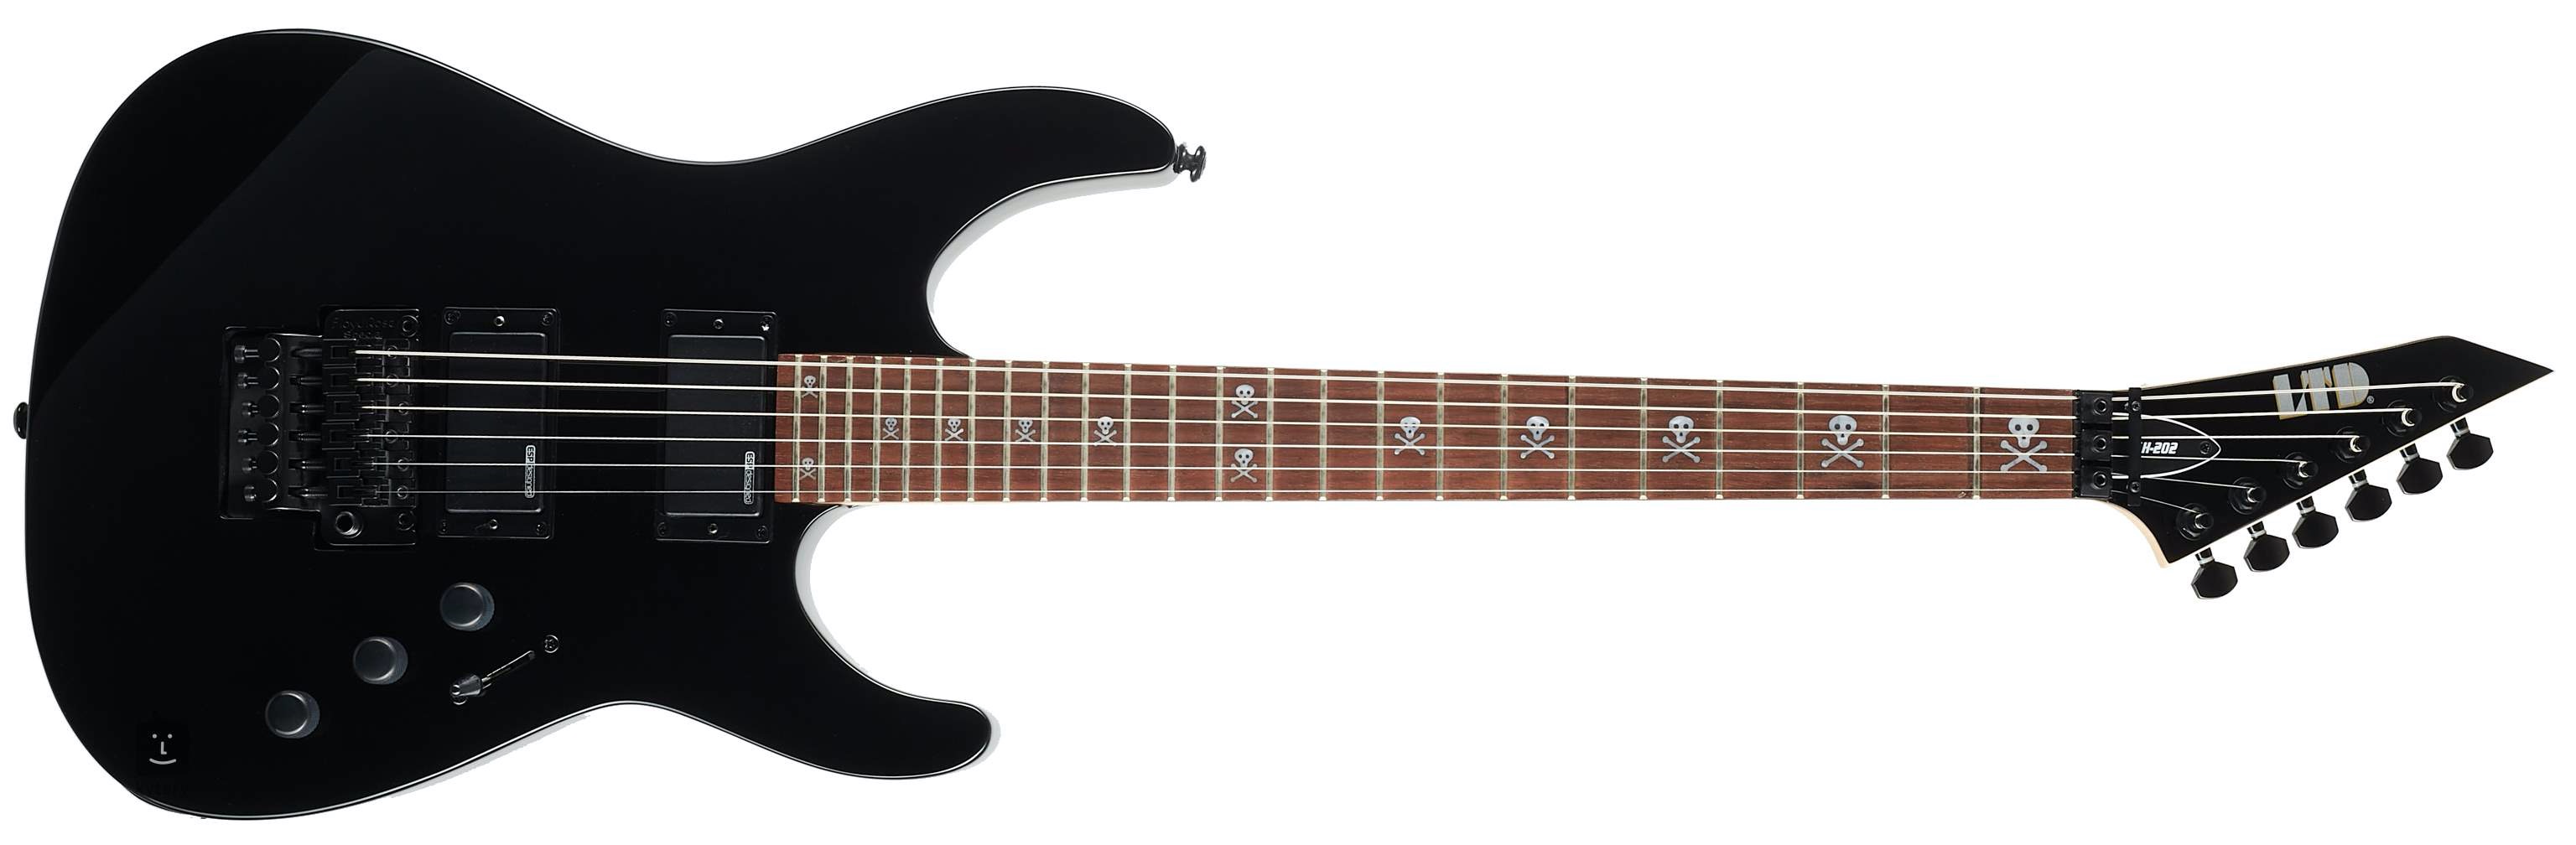 Ltd (Esp) kh202 kirk hammett Electrische gitaar